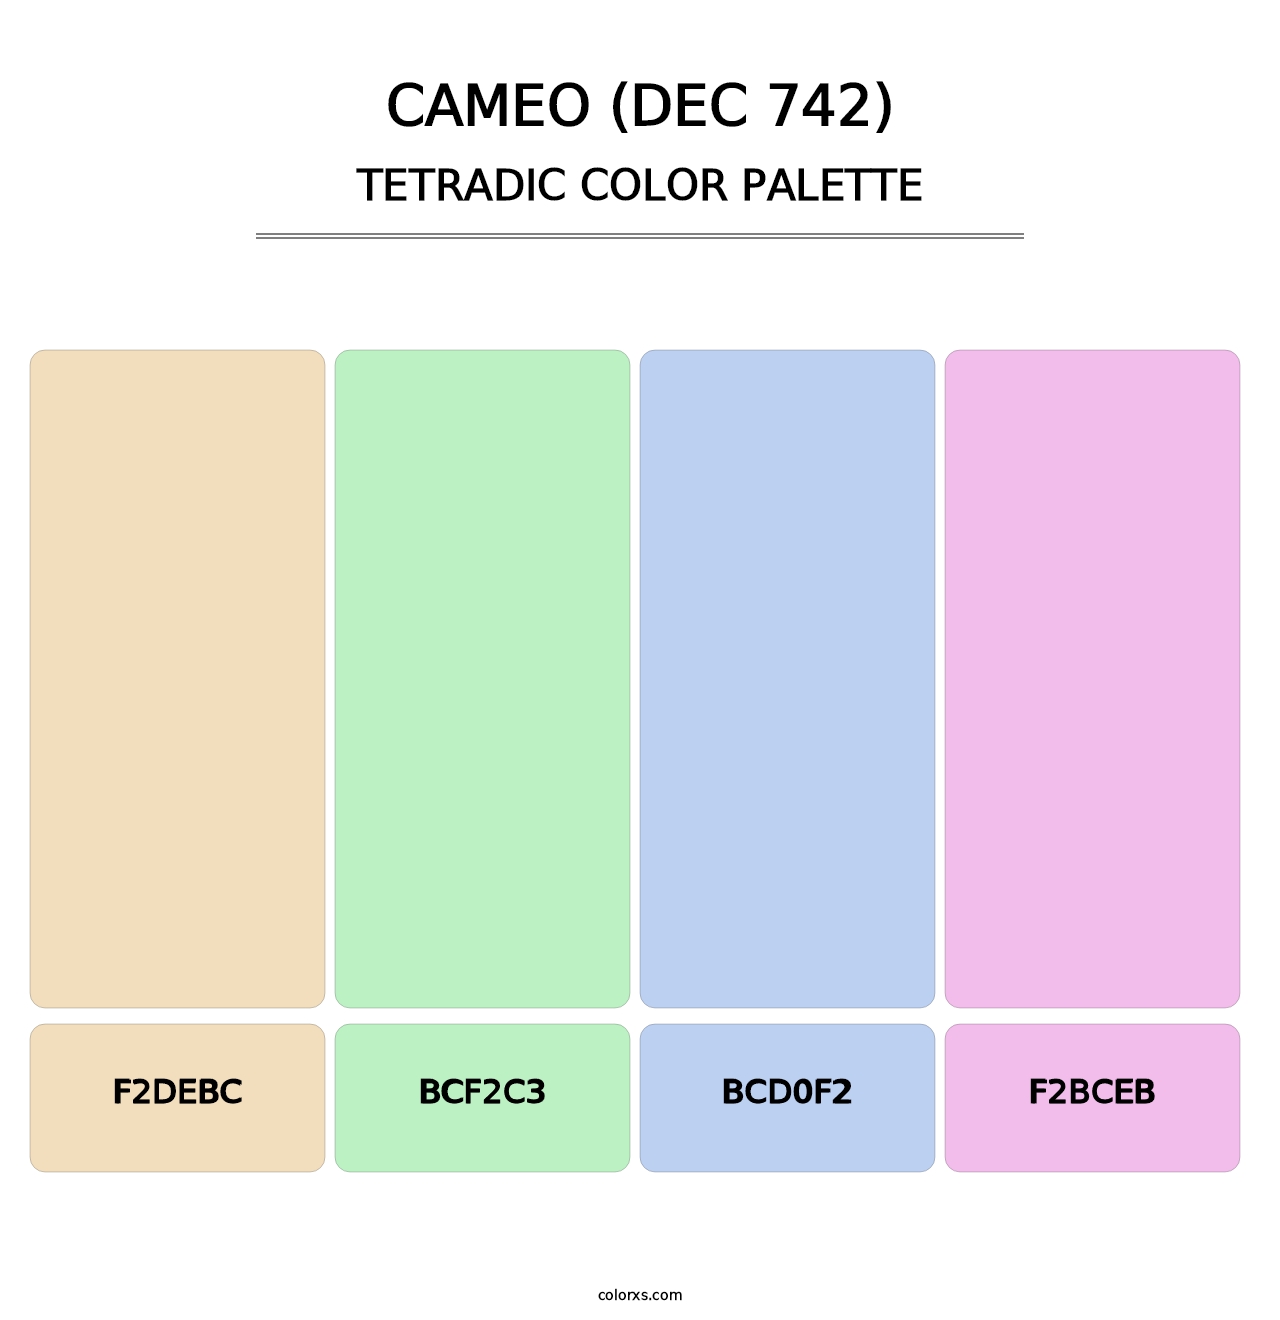 Cameo (DEC 742) - Tetradic Color Palette